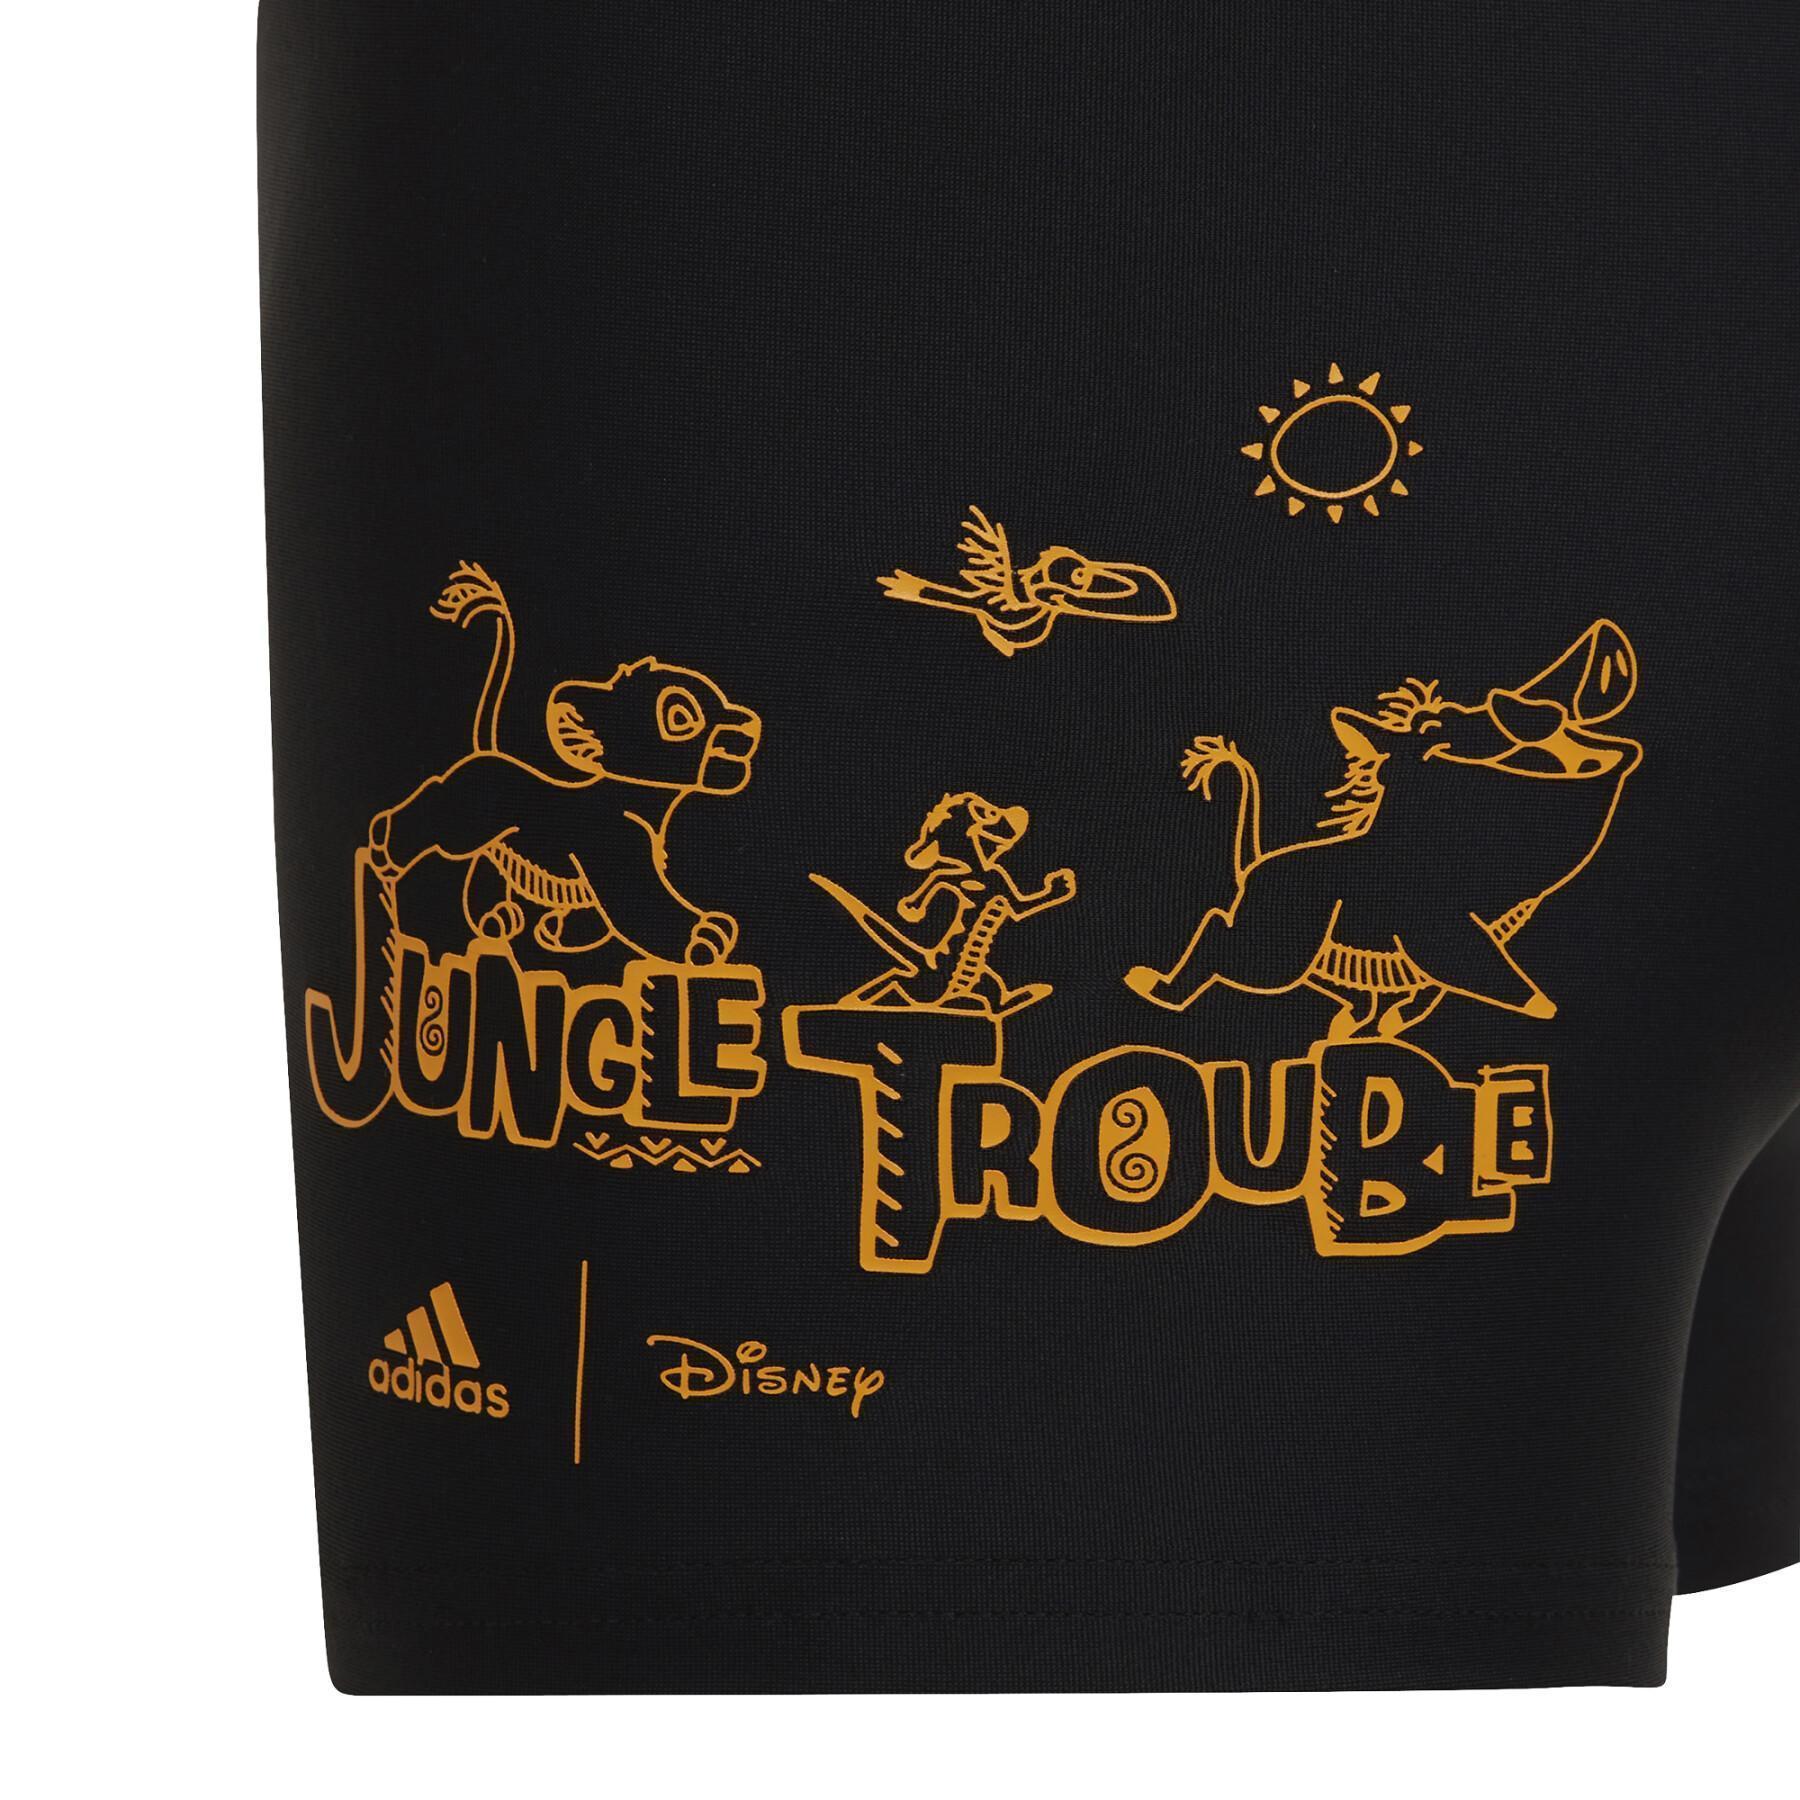 Children's boxer shorts adidas X Disney Lion King Boys Brief